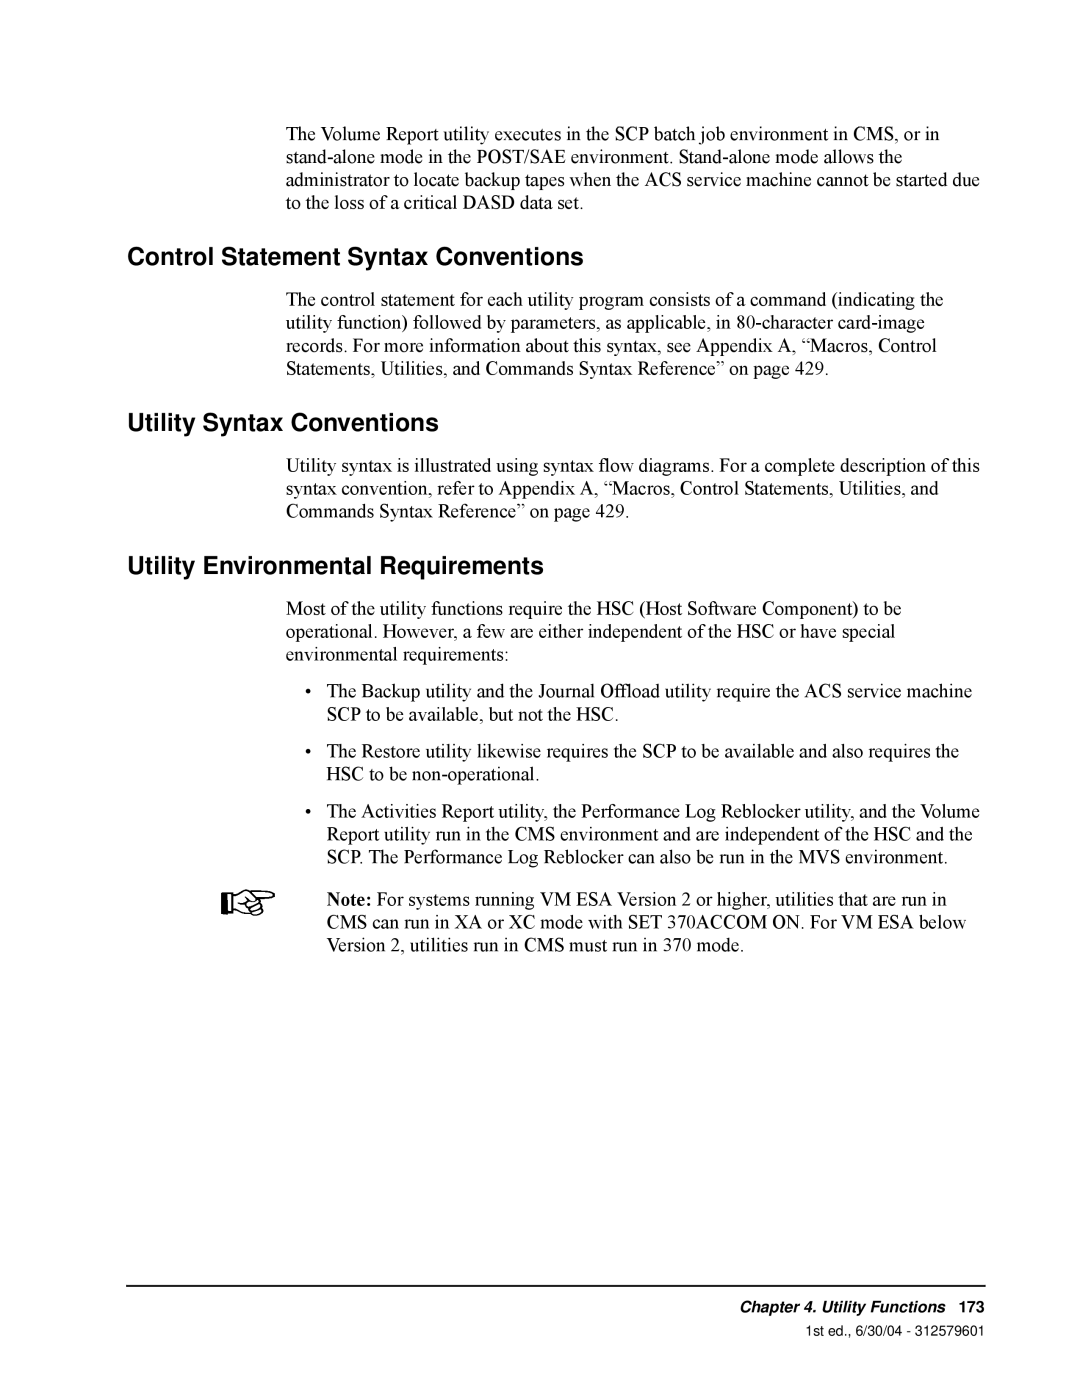 StorageTek 6 manual Control Statement Syntax Conventions, Utility Syntax Conventions, Utility Environmental Requirements 